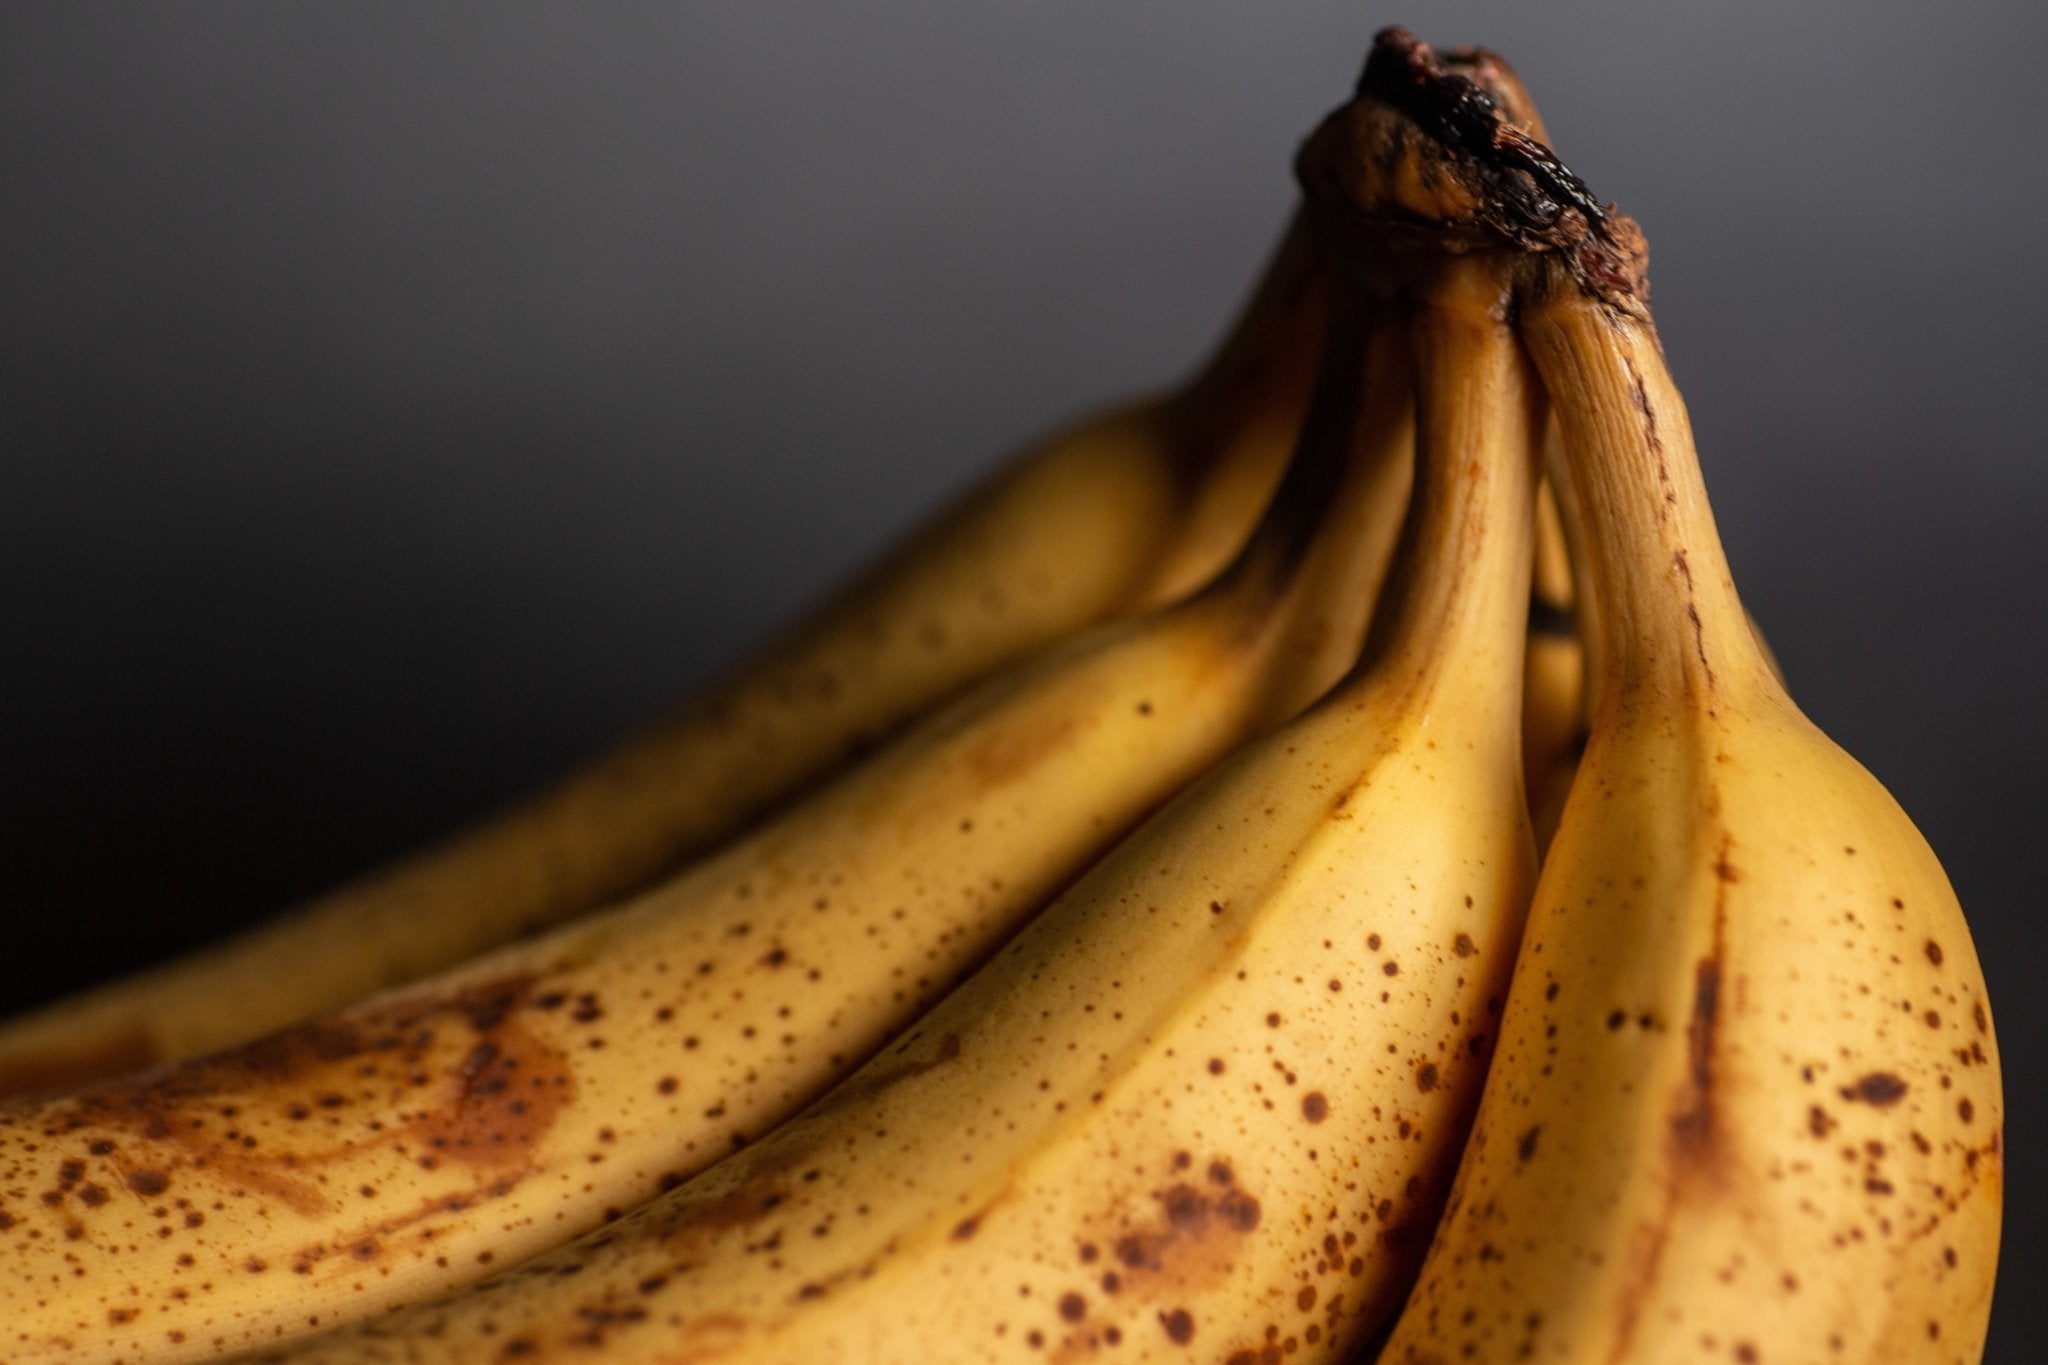 The ULTIMATE Banana bread recipe tips!